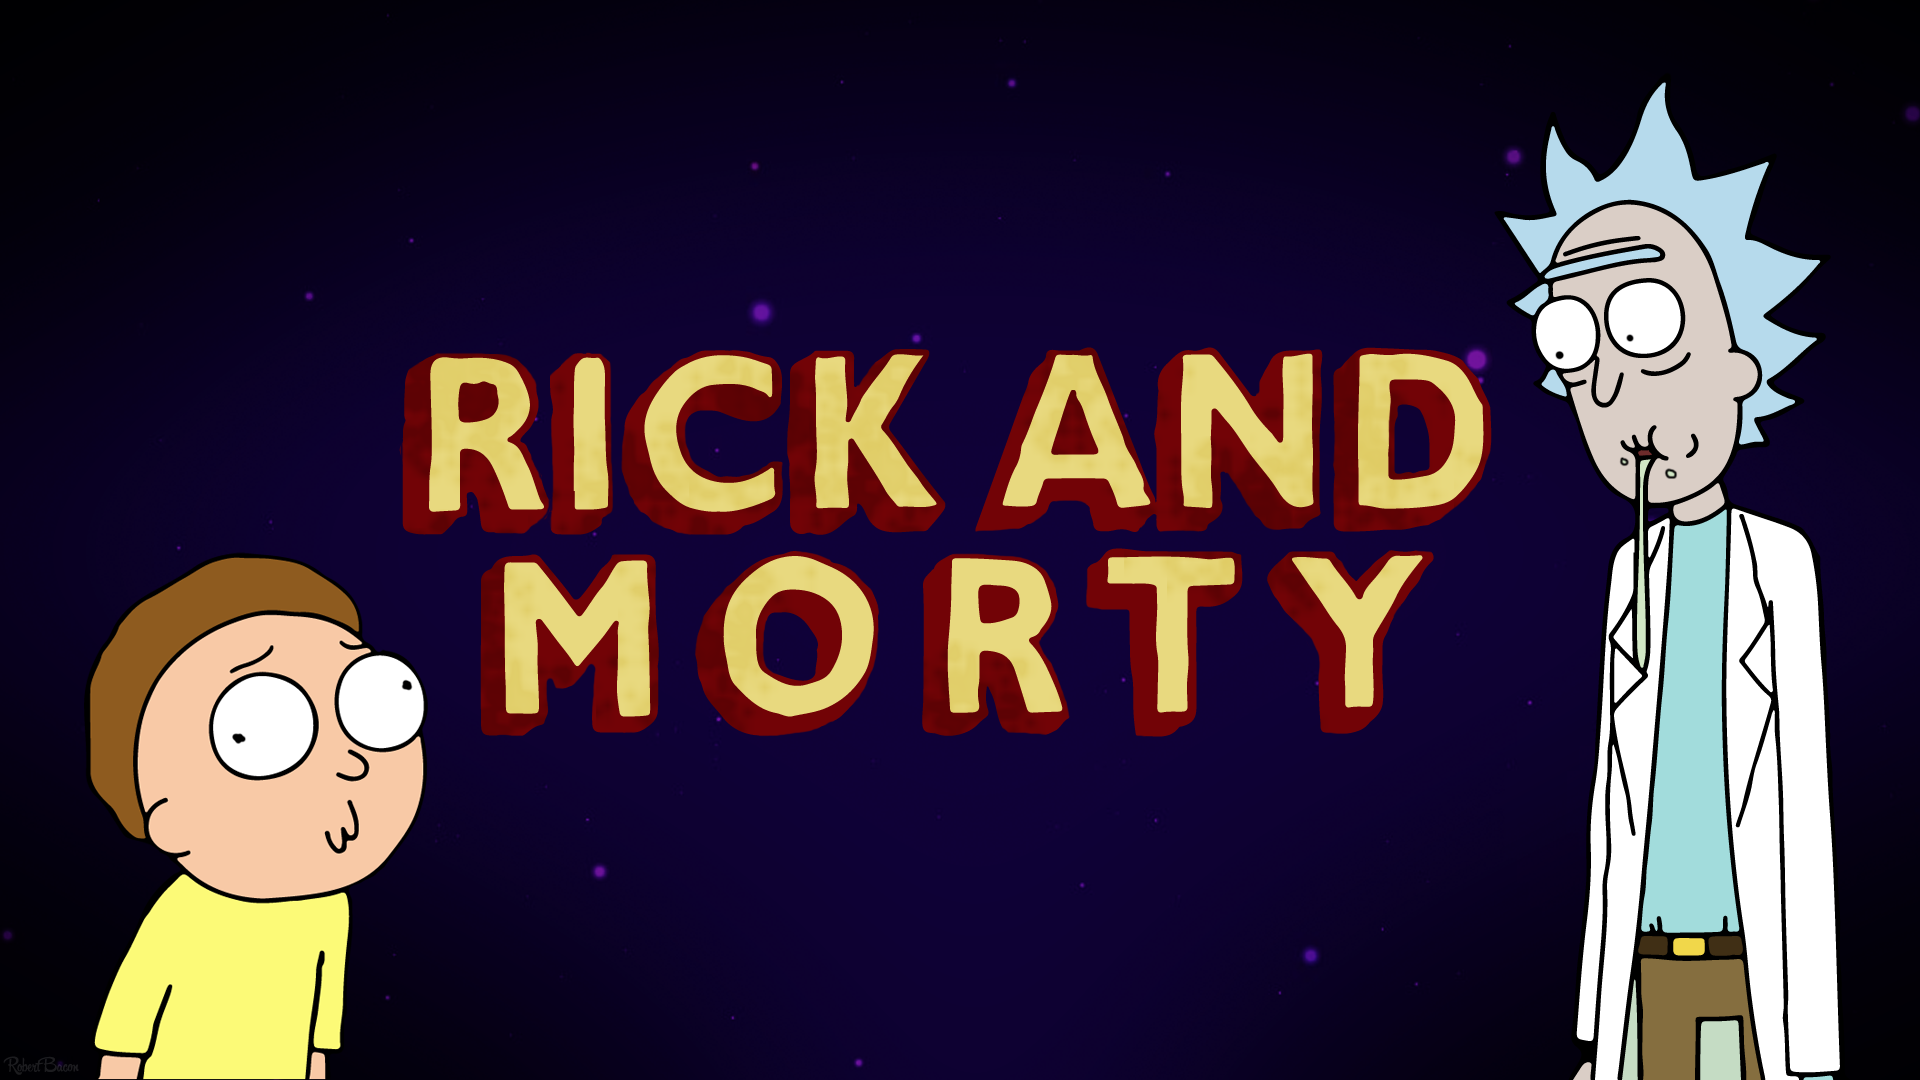 Rick and Morty Wallpaper, 1920x1080. Cartoon